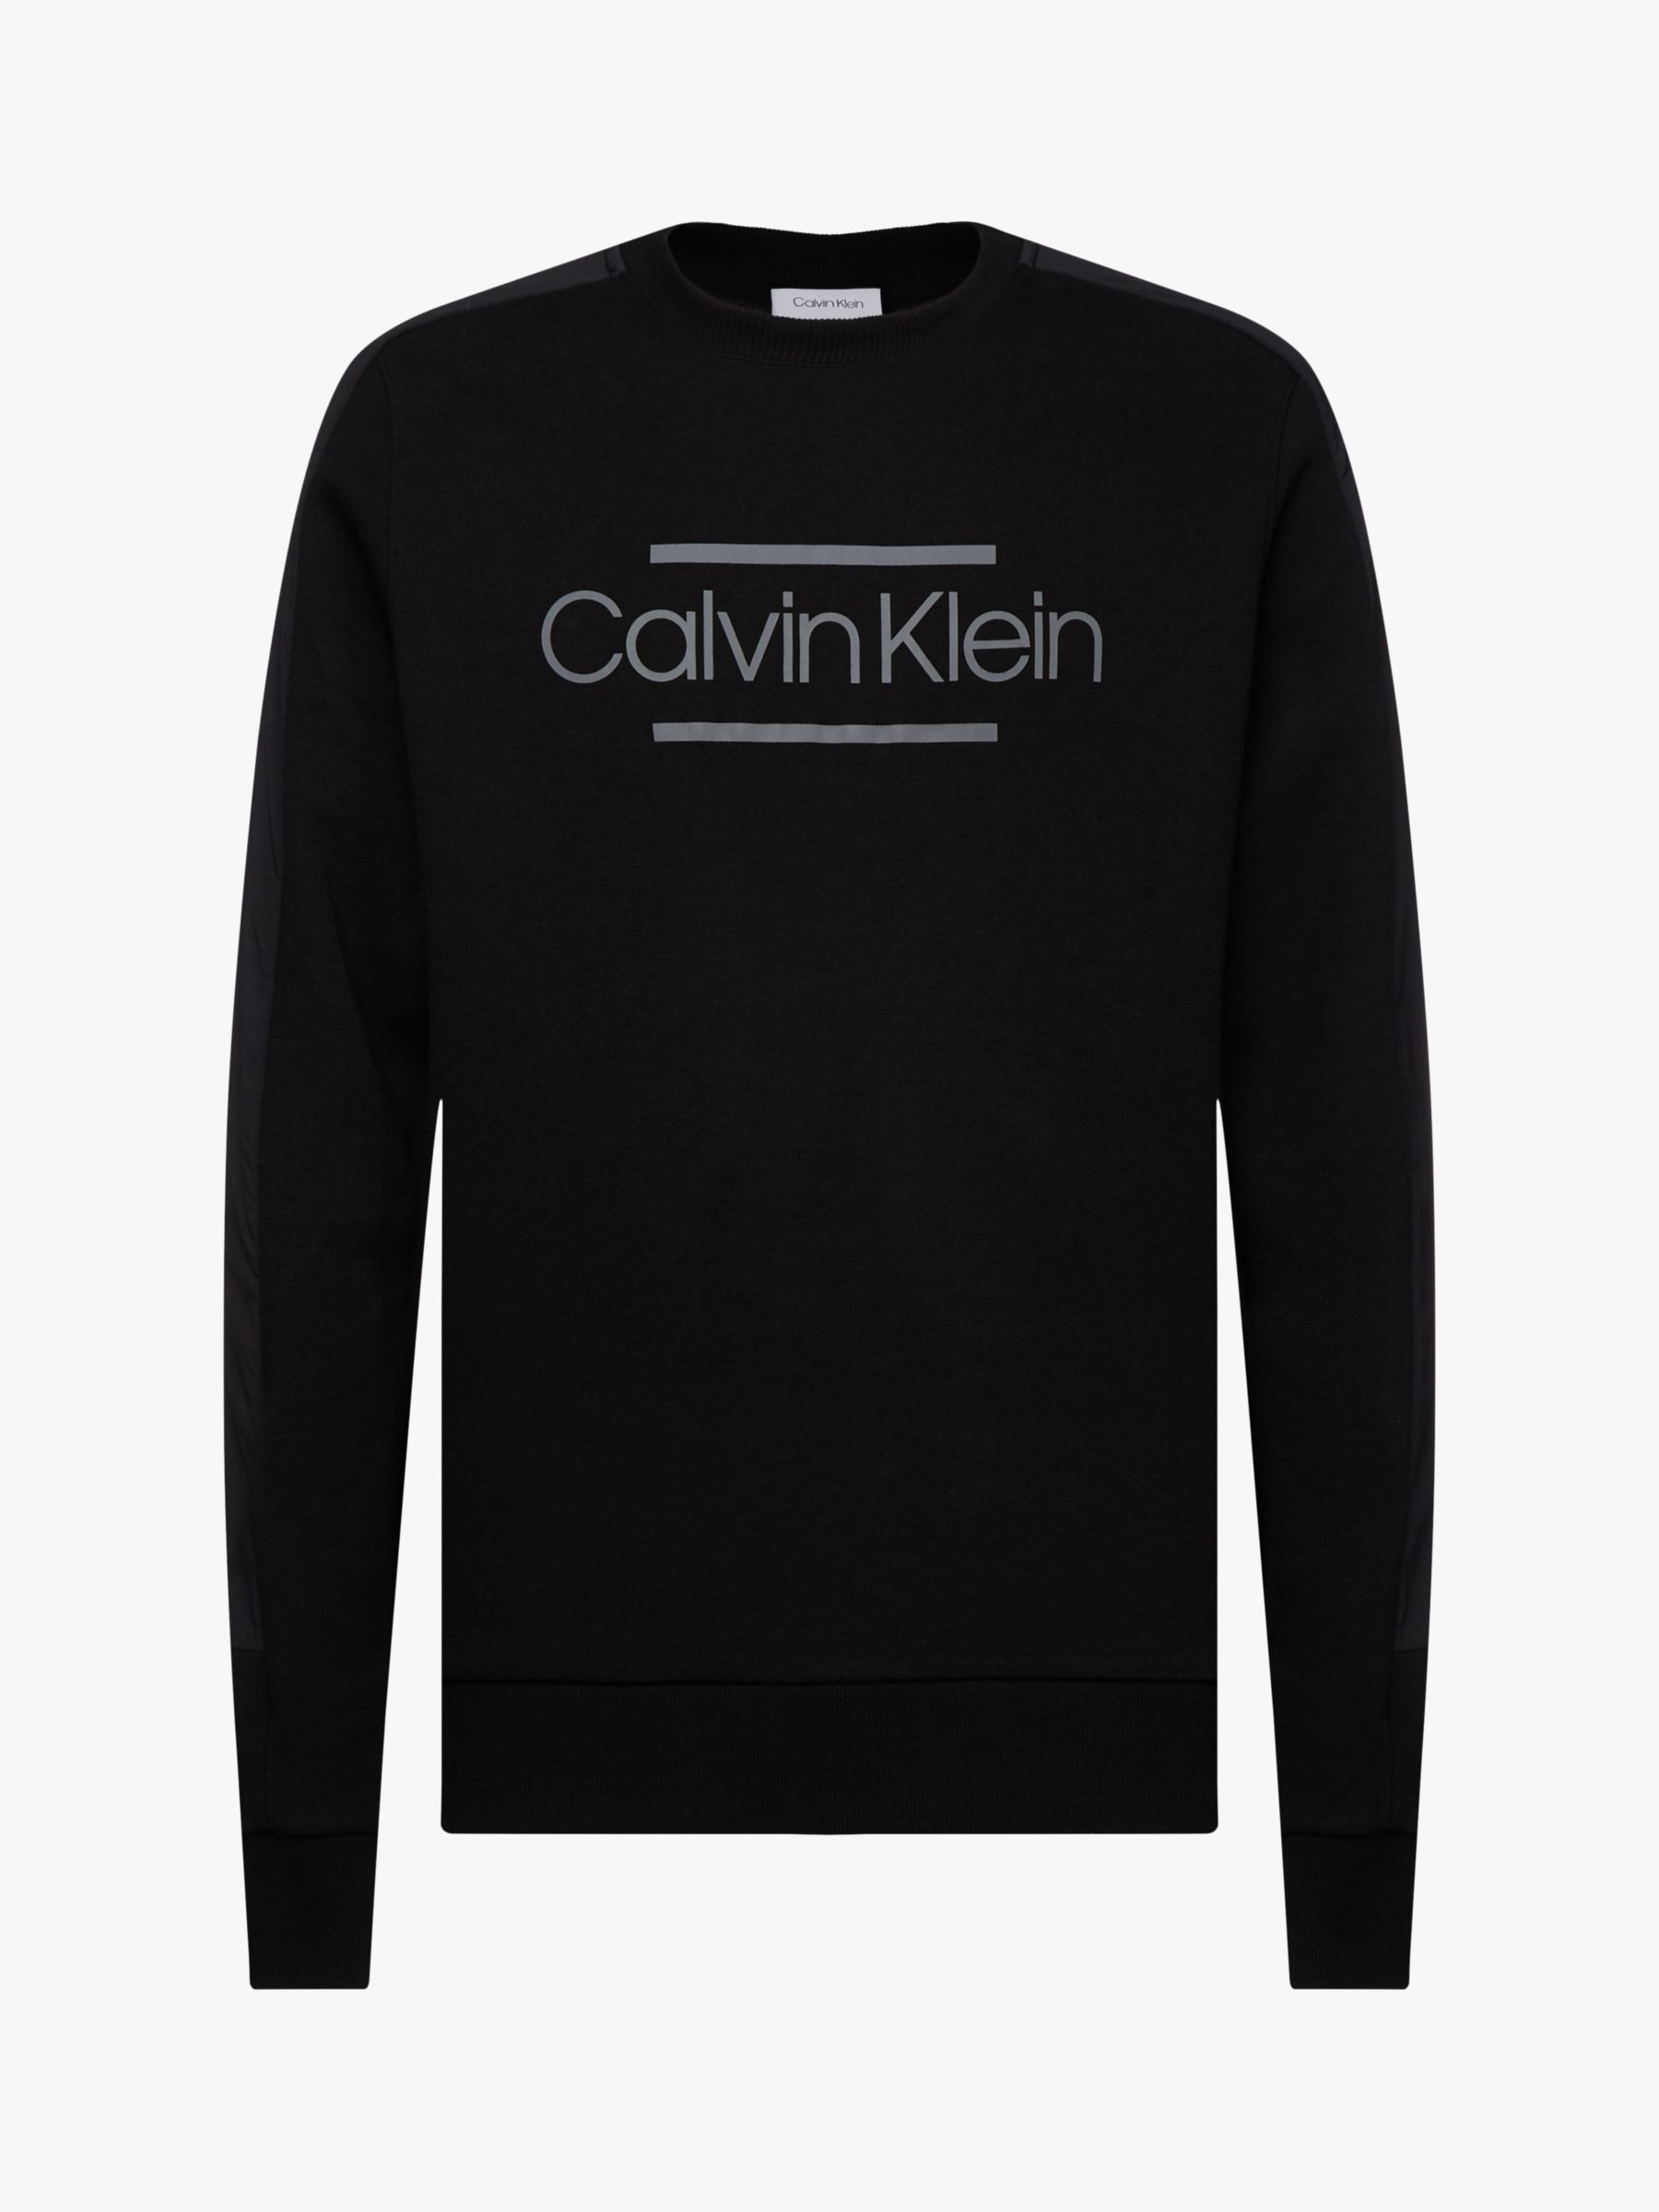 Calvin Klein Logo Crew Neck Jumper, Black at John Lewis & Partners